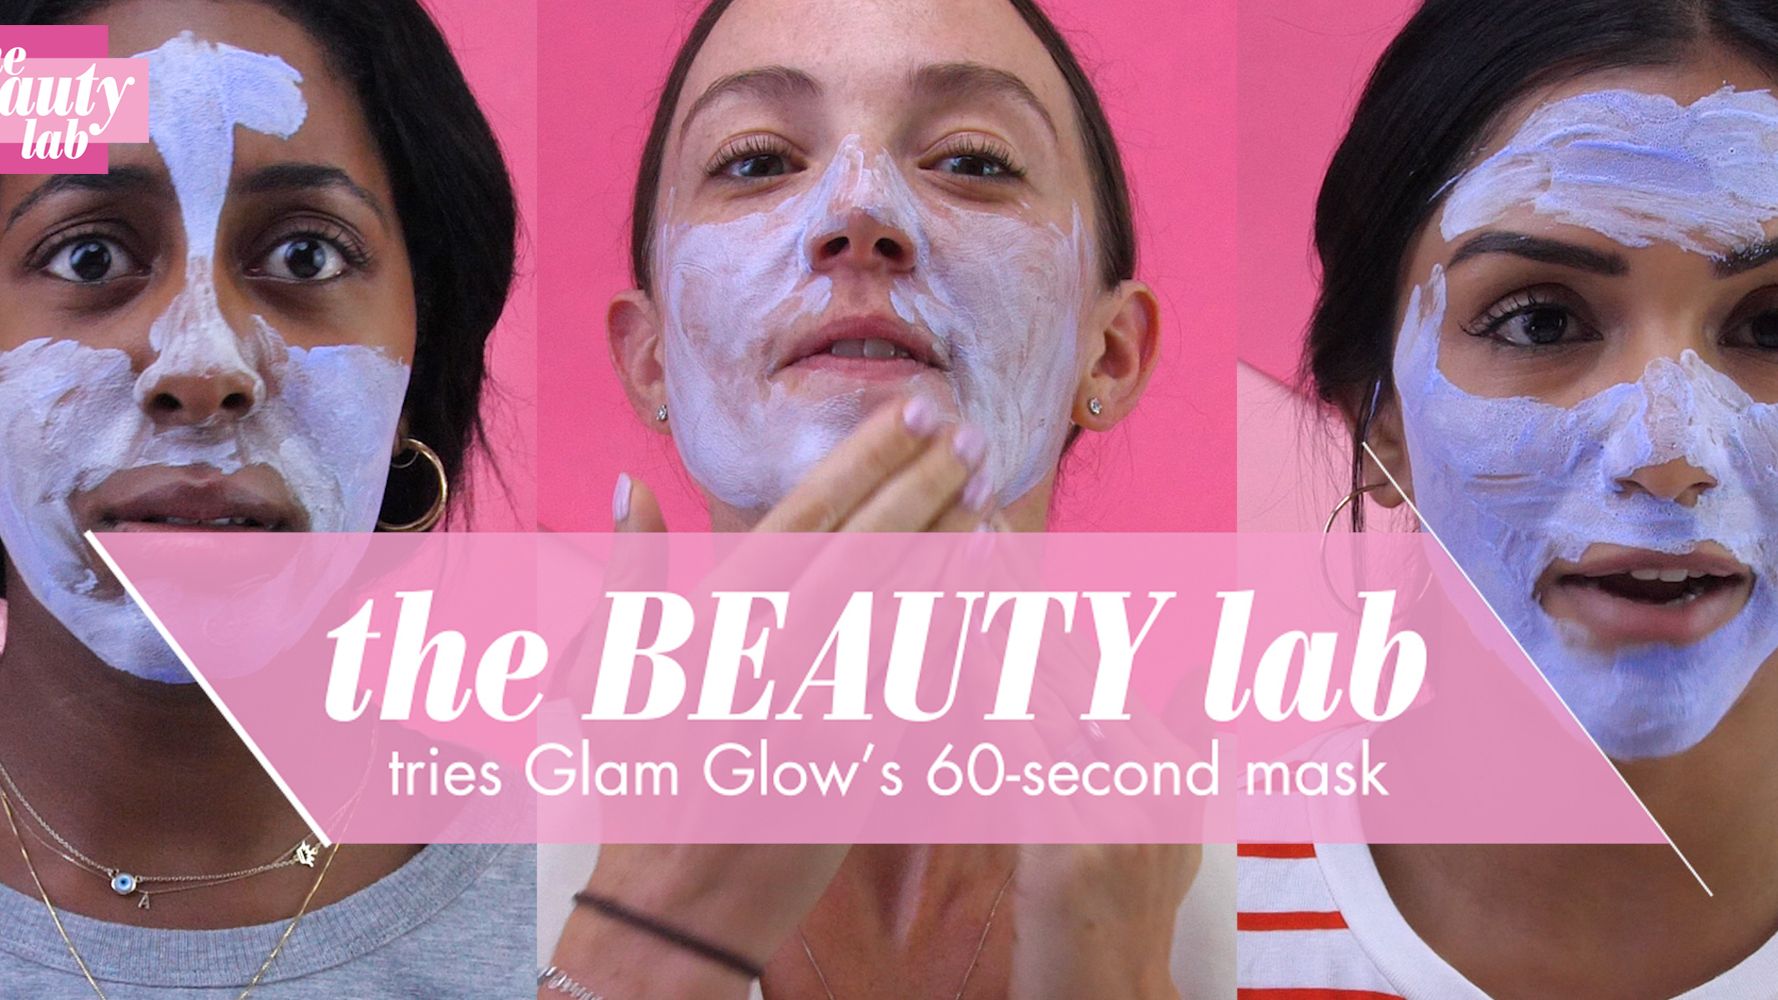 Prædiken Billy barrikade Watch Cosmopolitan's Beauty Team put Glam Glow's Insta Mud 60 Second Pore  Refining Treatment to the Test on Camera